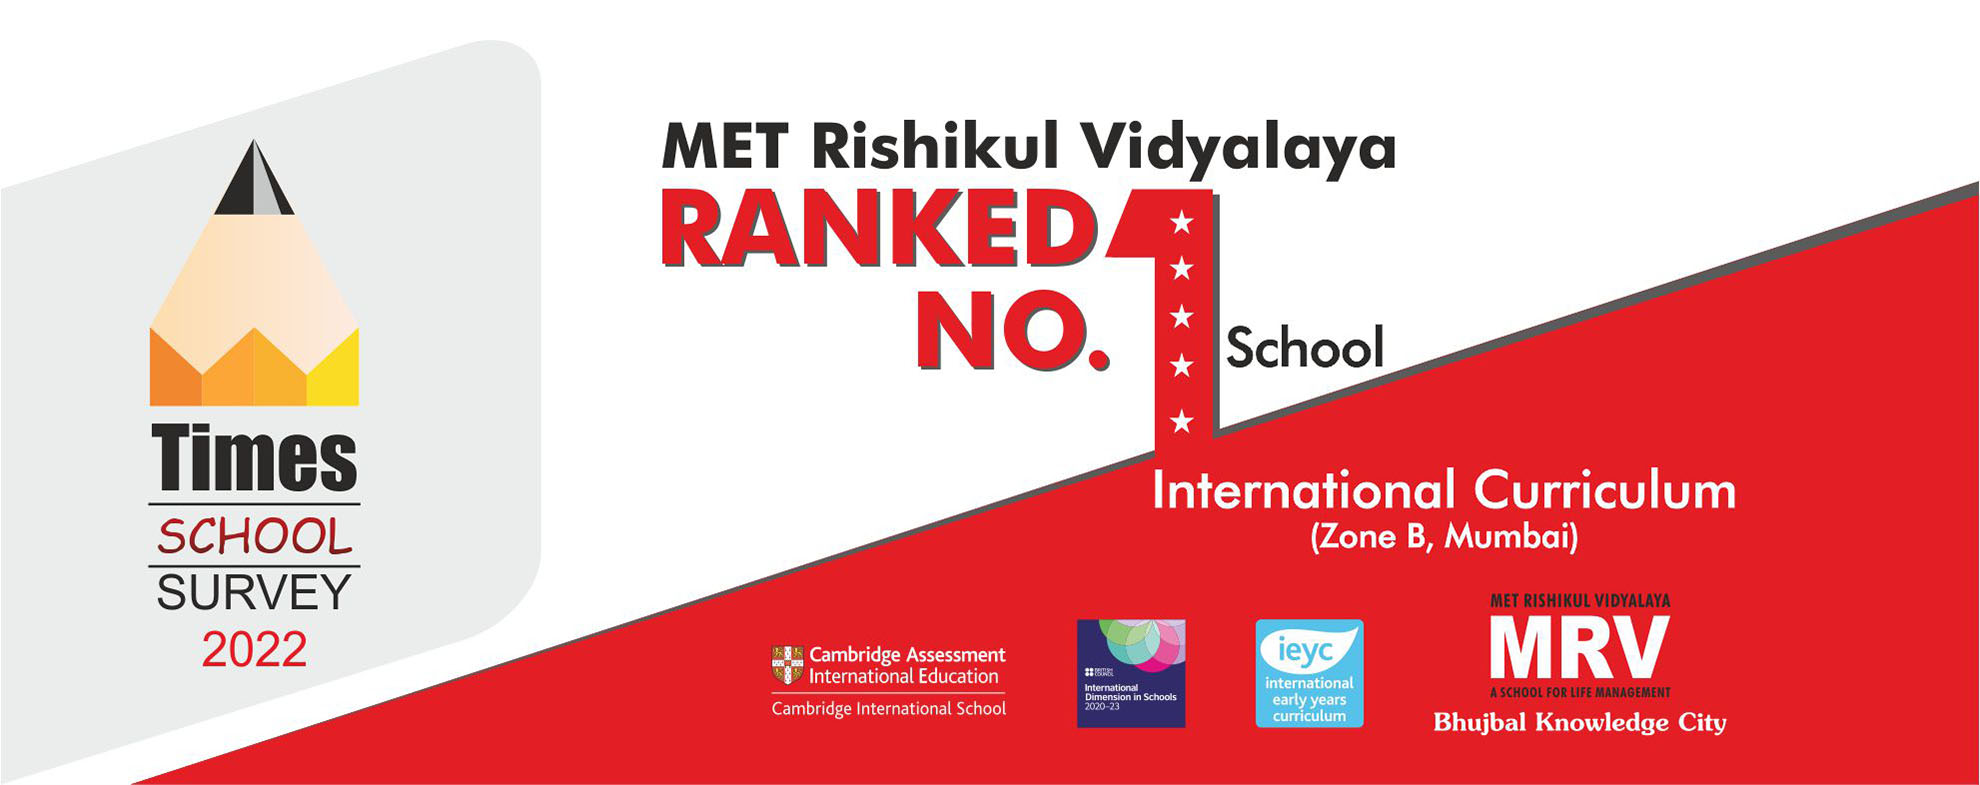 MRV Ranked No.1 School in Mumbai